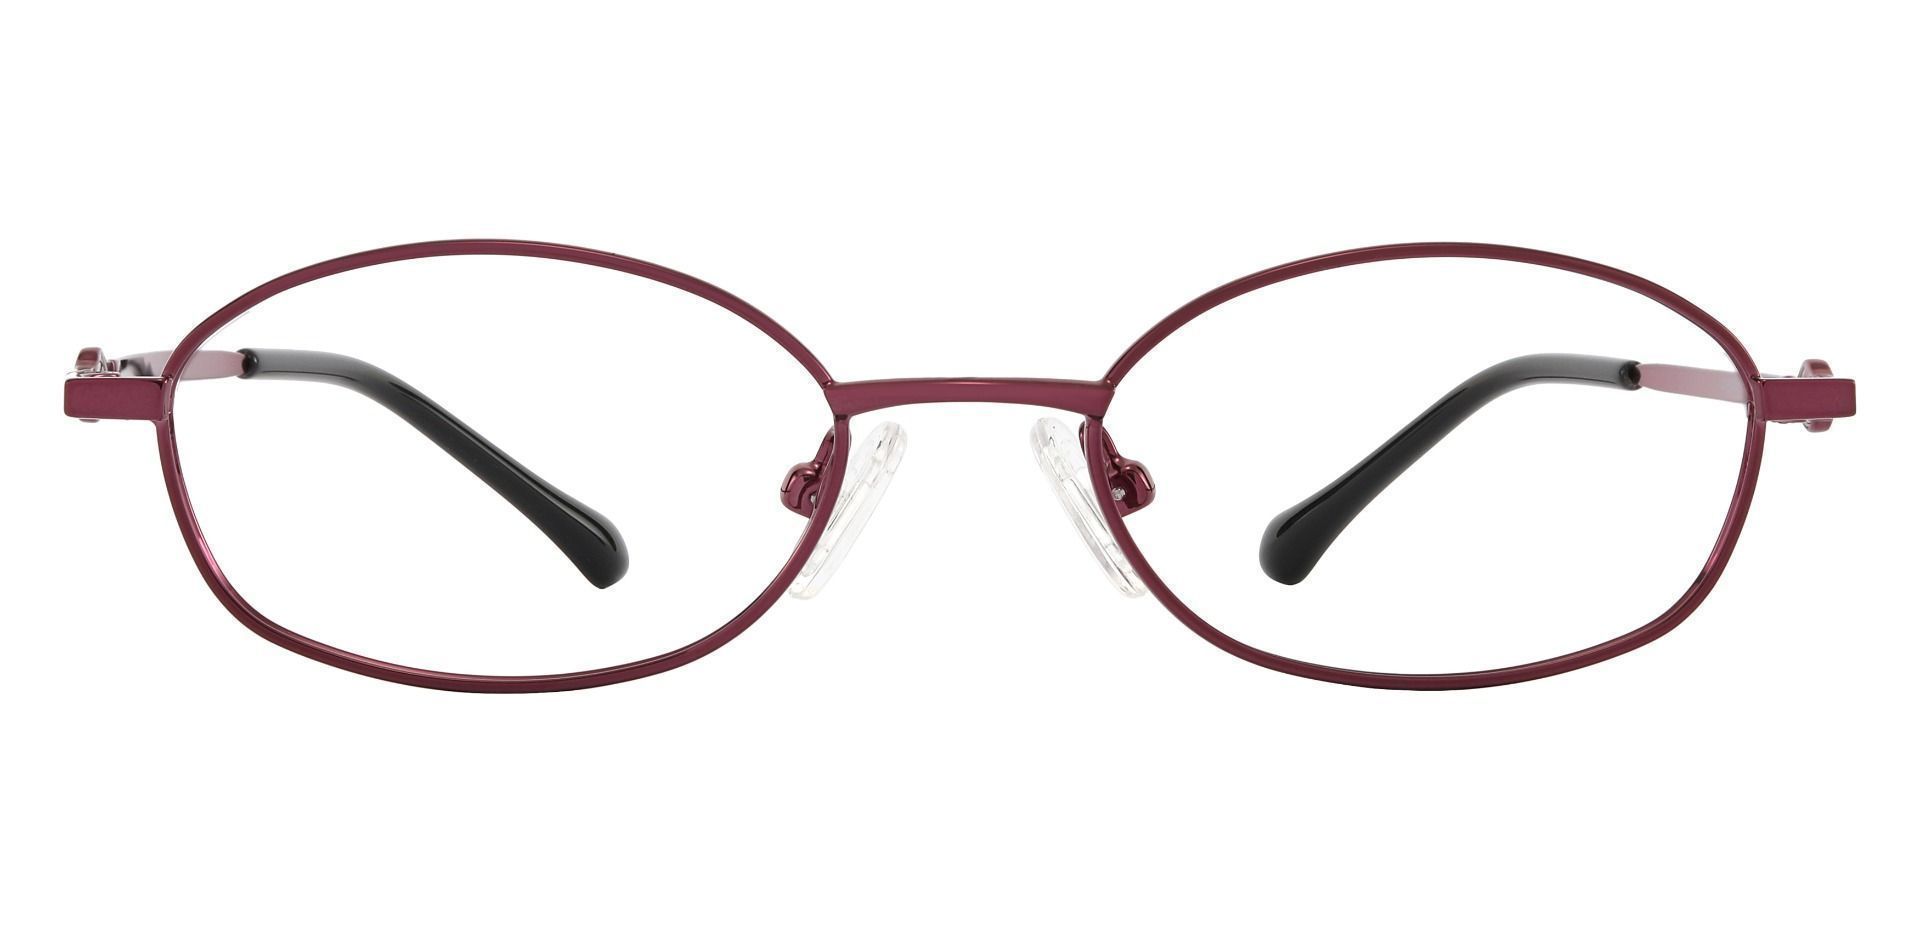 Fletcher Oval Blue Light Blocking Glasses - Purple